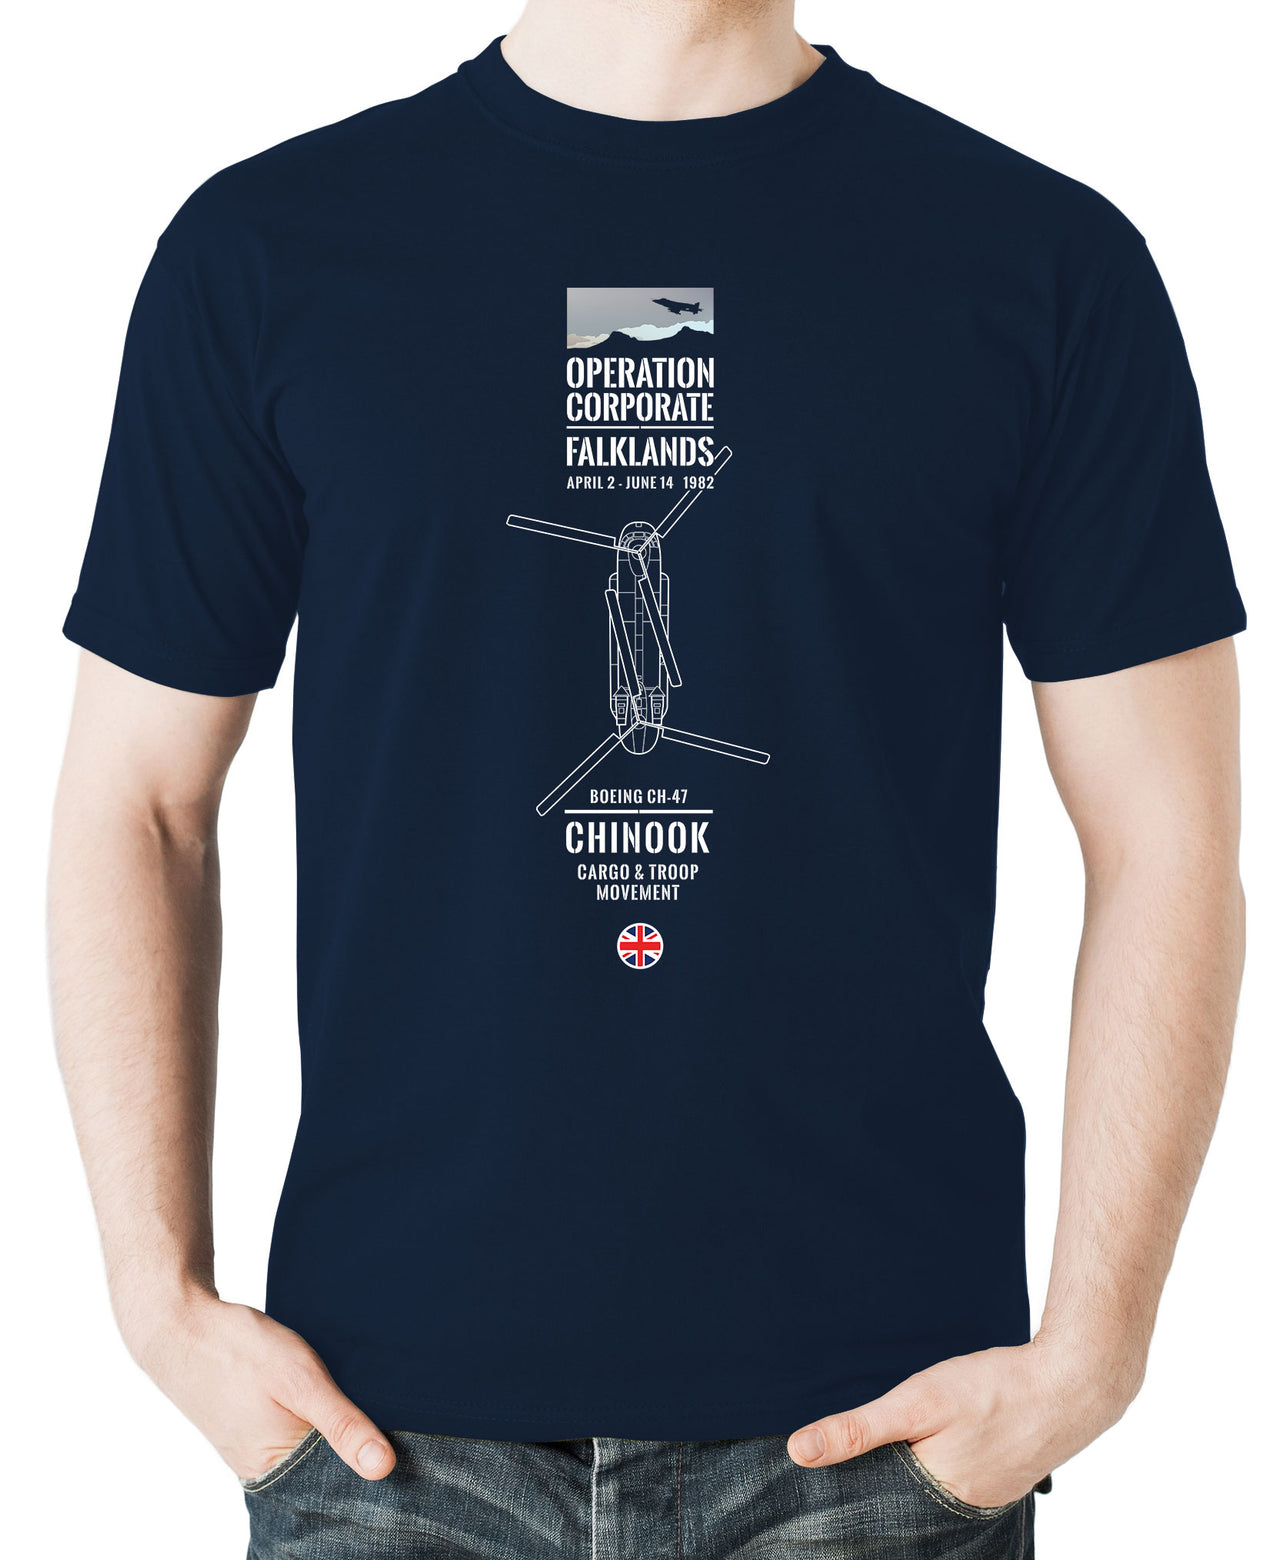 CH-47 Chinook - T-shirt